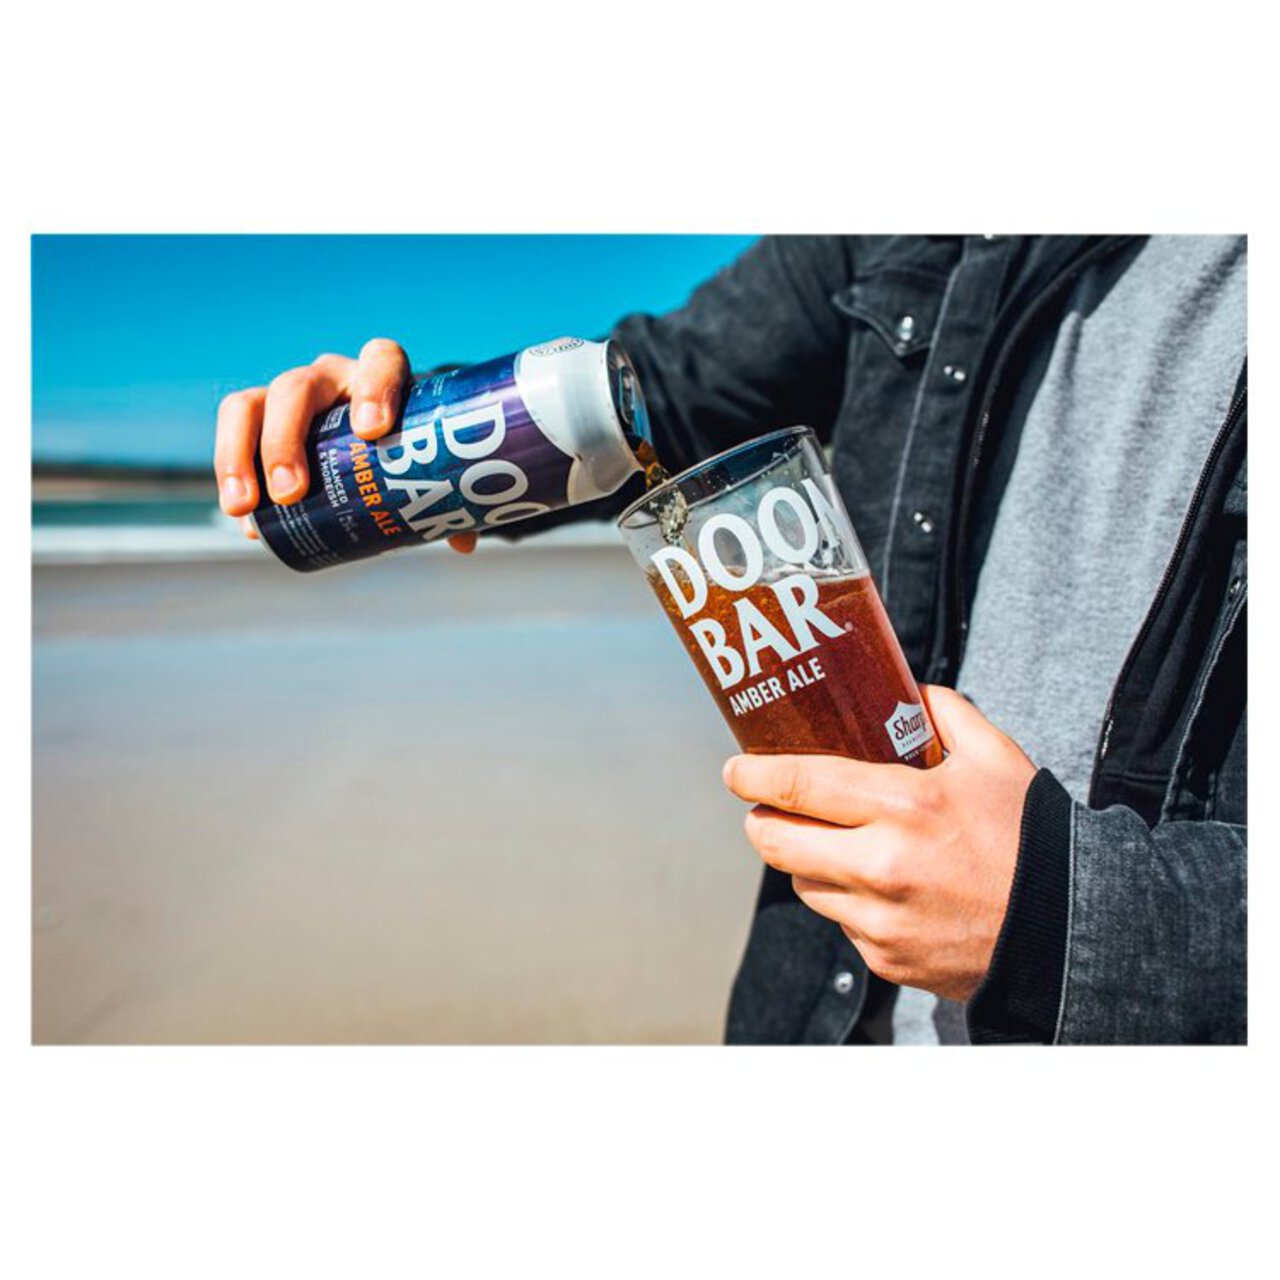 Sharp's Doom Bar  Buy 5L Mini Cask Now – Sharp's Brewery